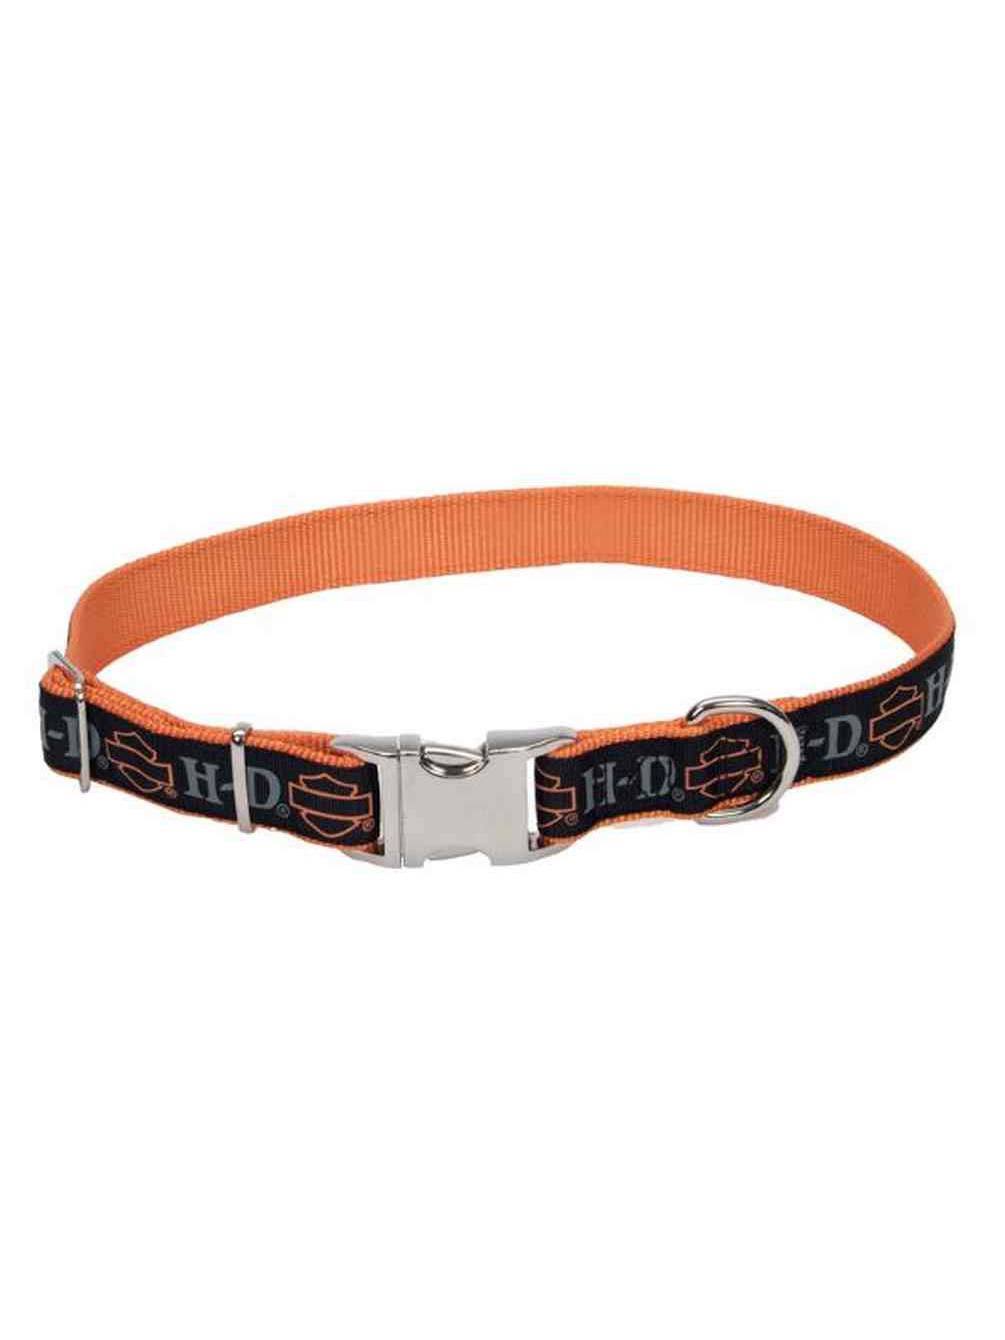 Harley-Davidson Adjustable Designer Ribbon Premium Dog Collar - Black & Orange, Harley Davidson | Dogs